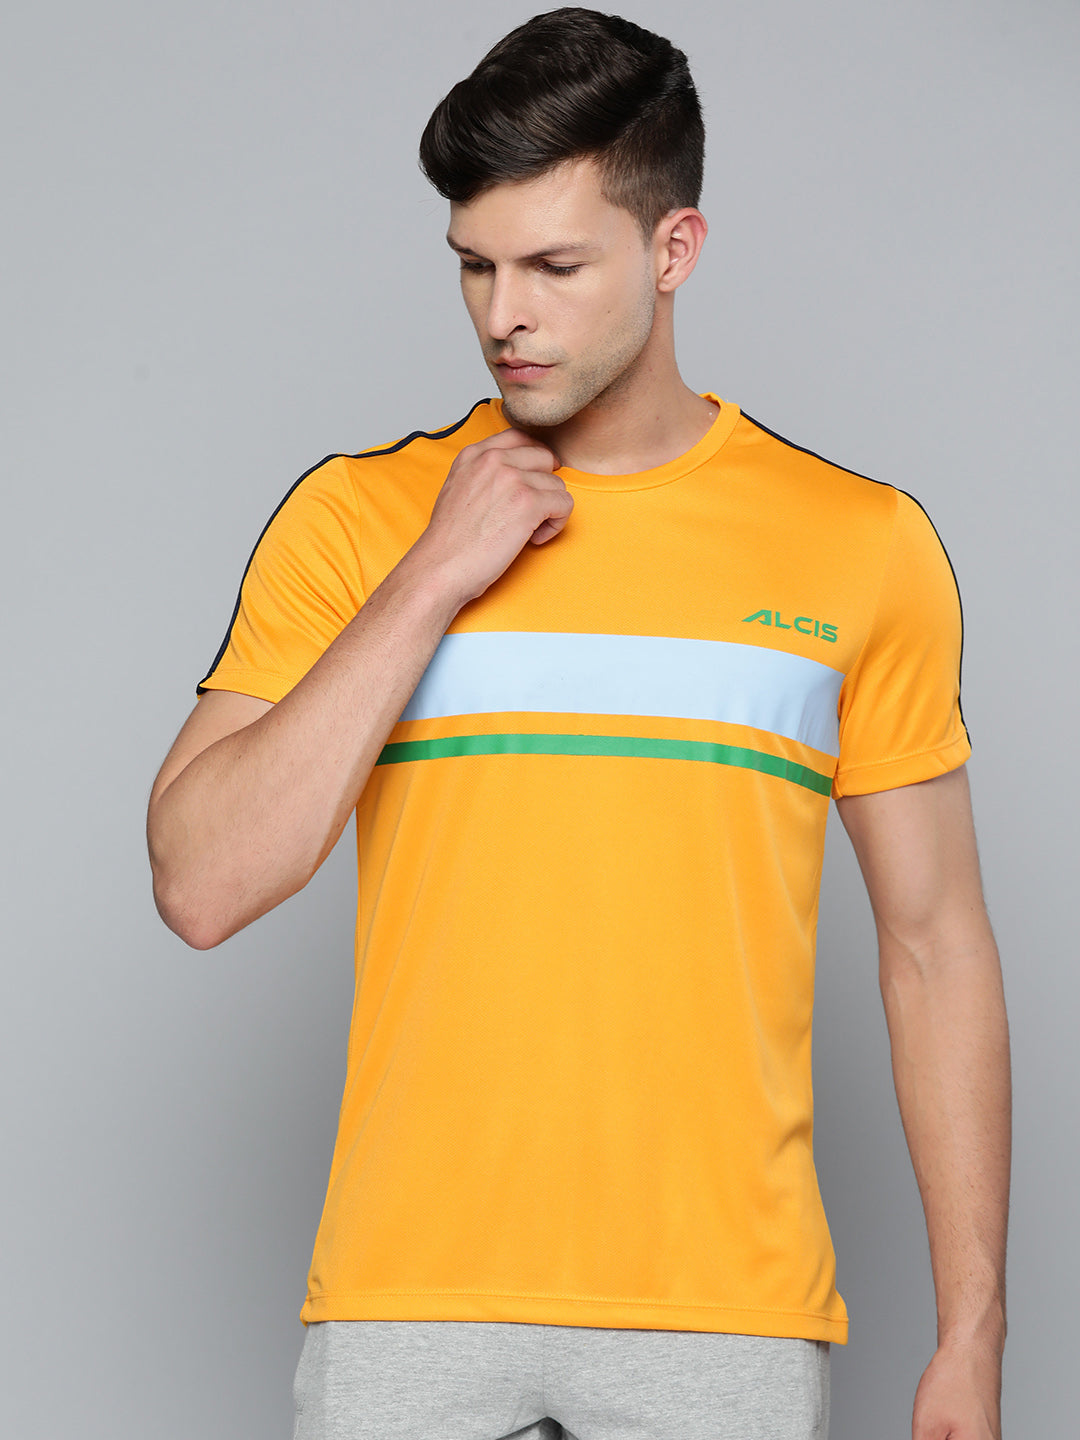 Alcis Men Yellow & Blue Striped Slim Fit T-shirt